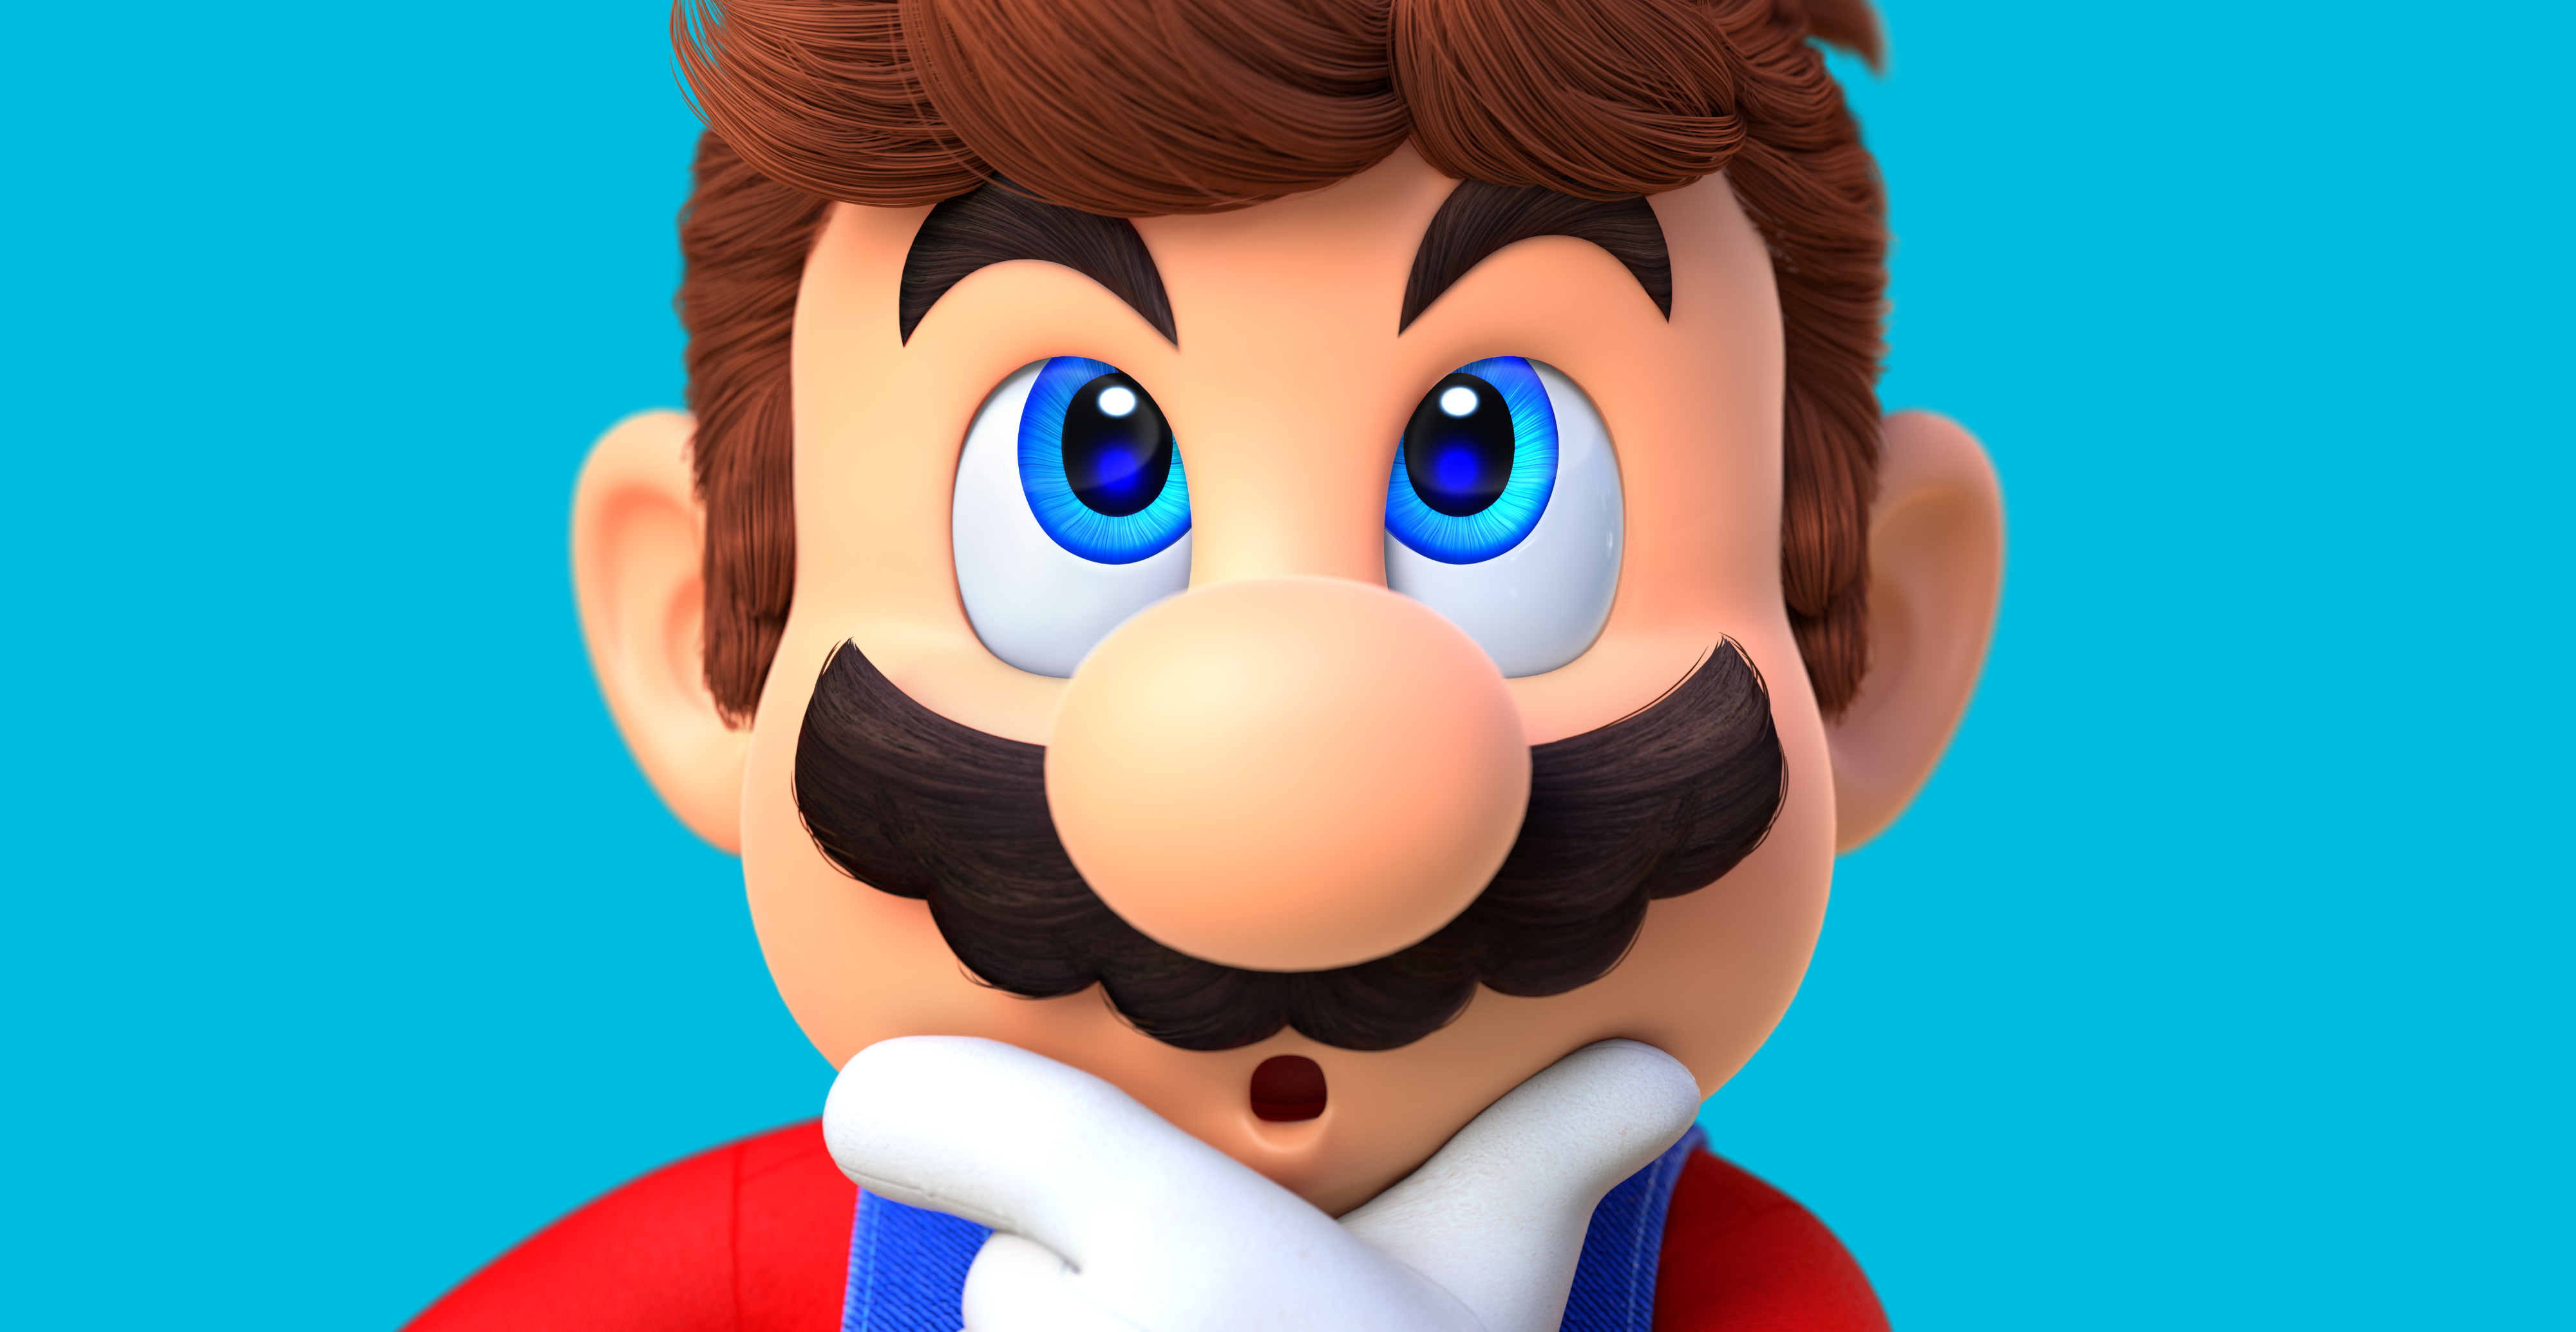 Super Mario Sunshine' does one thing far better than 'Super Mario